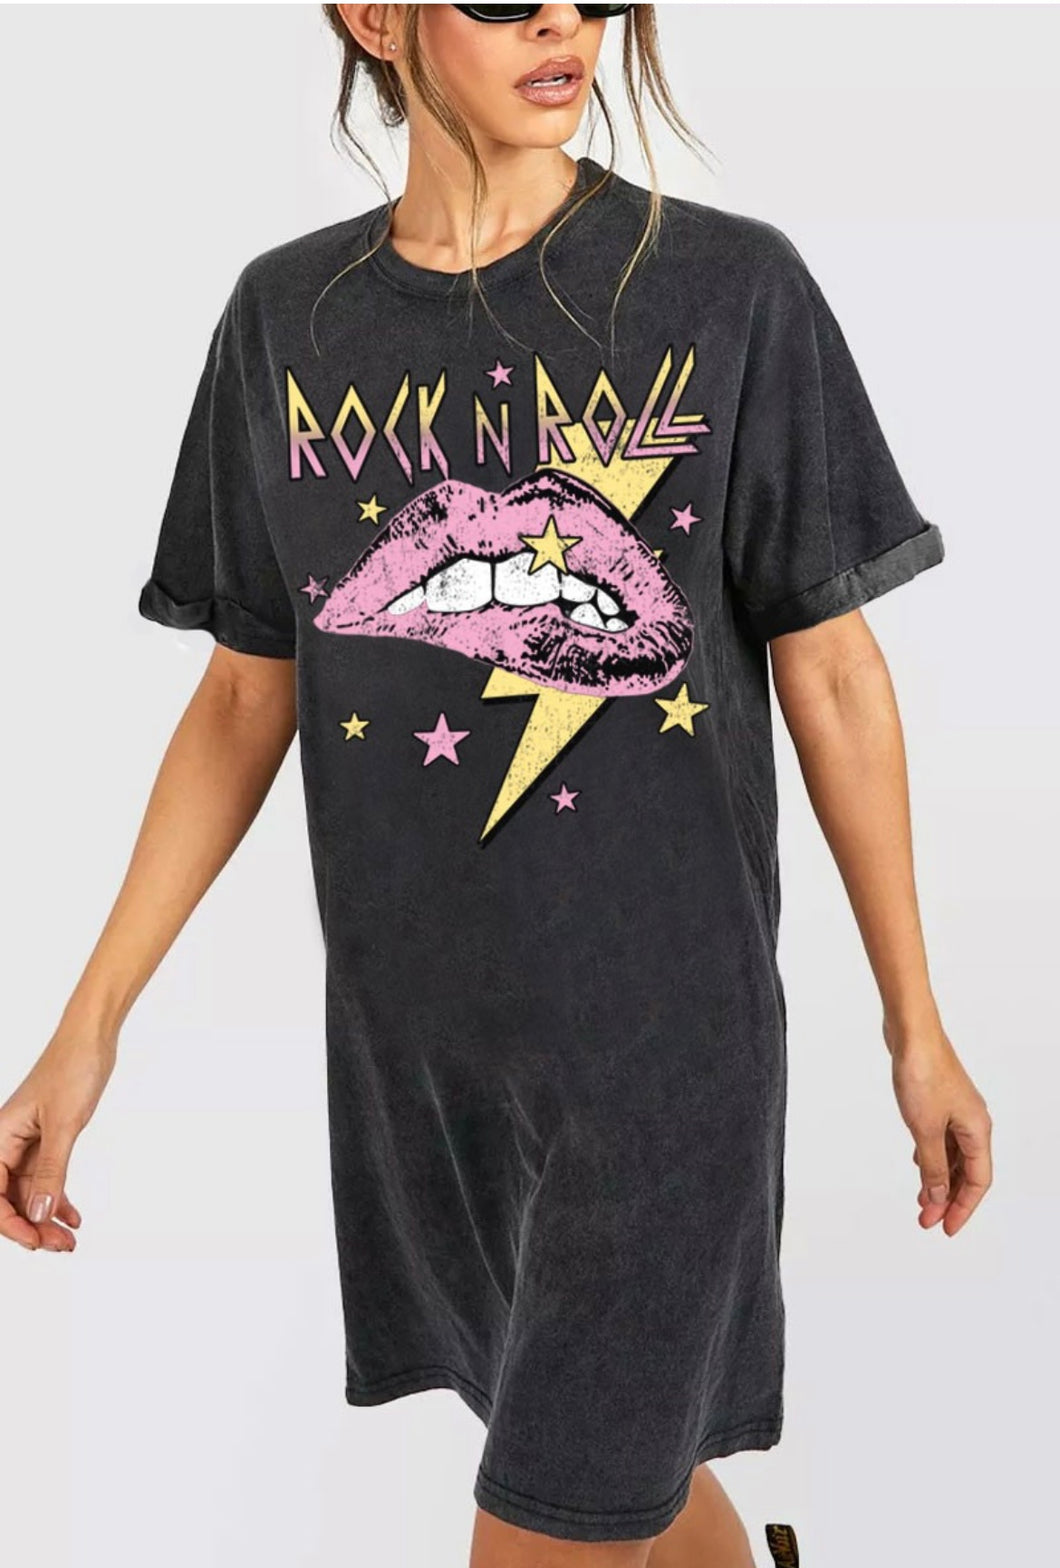 The ‘rock n’roll’ t shirt dress